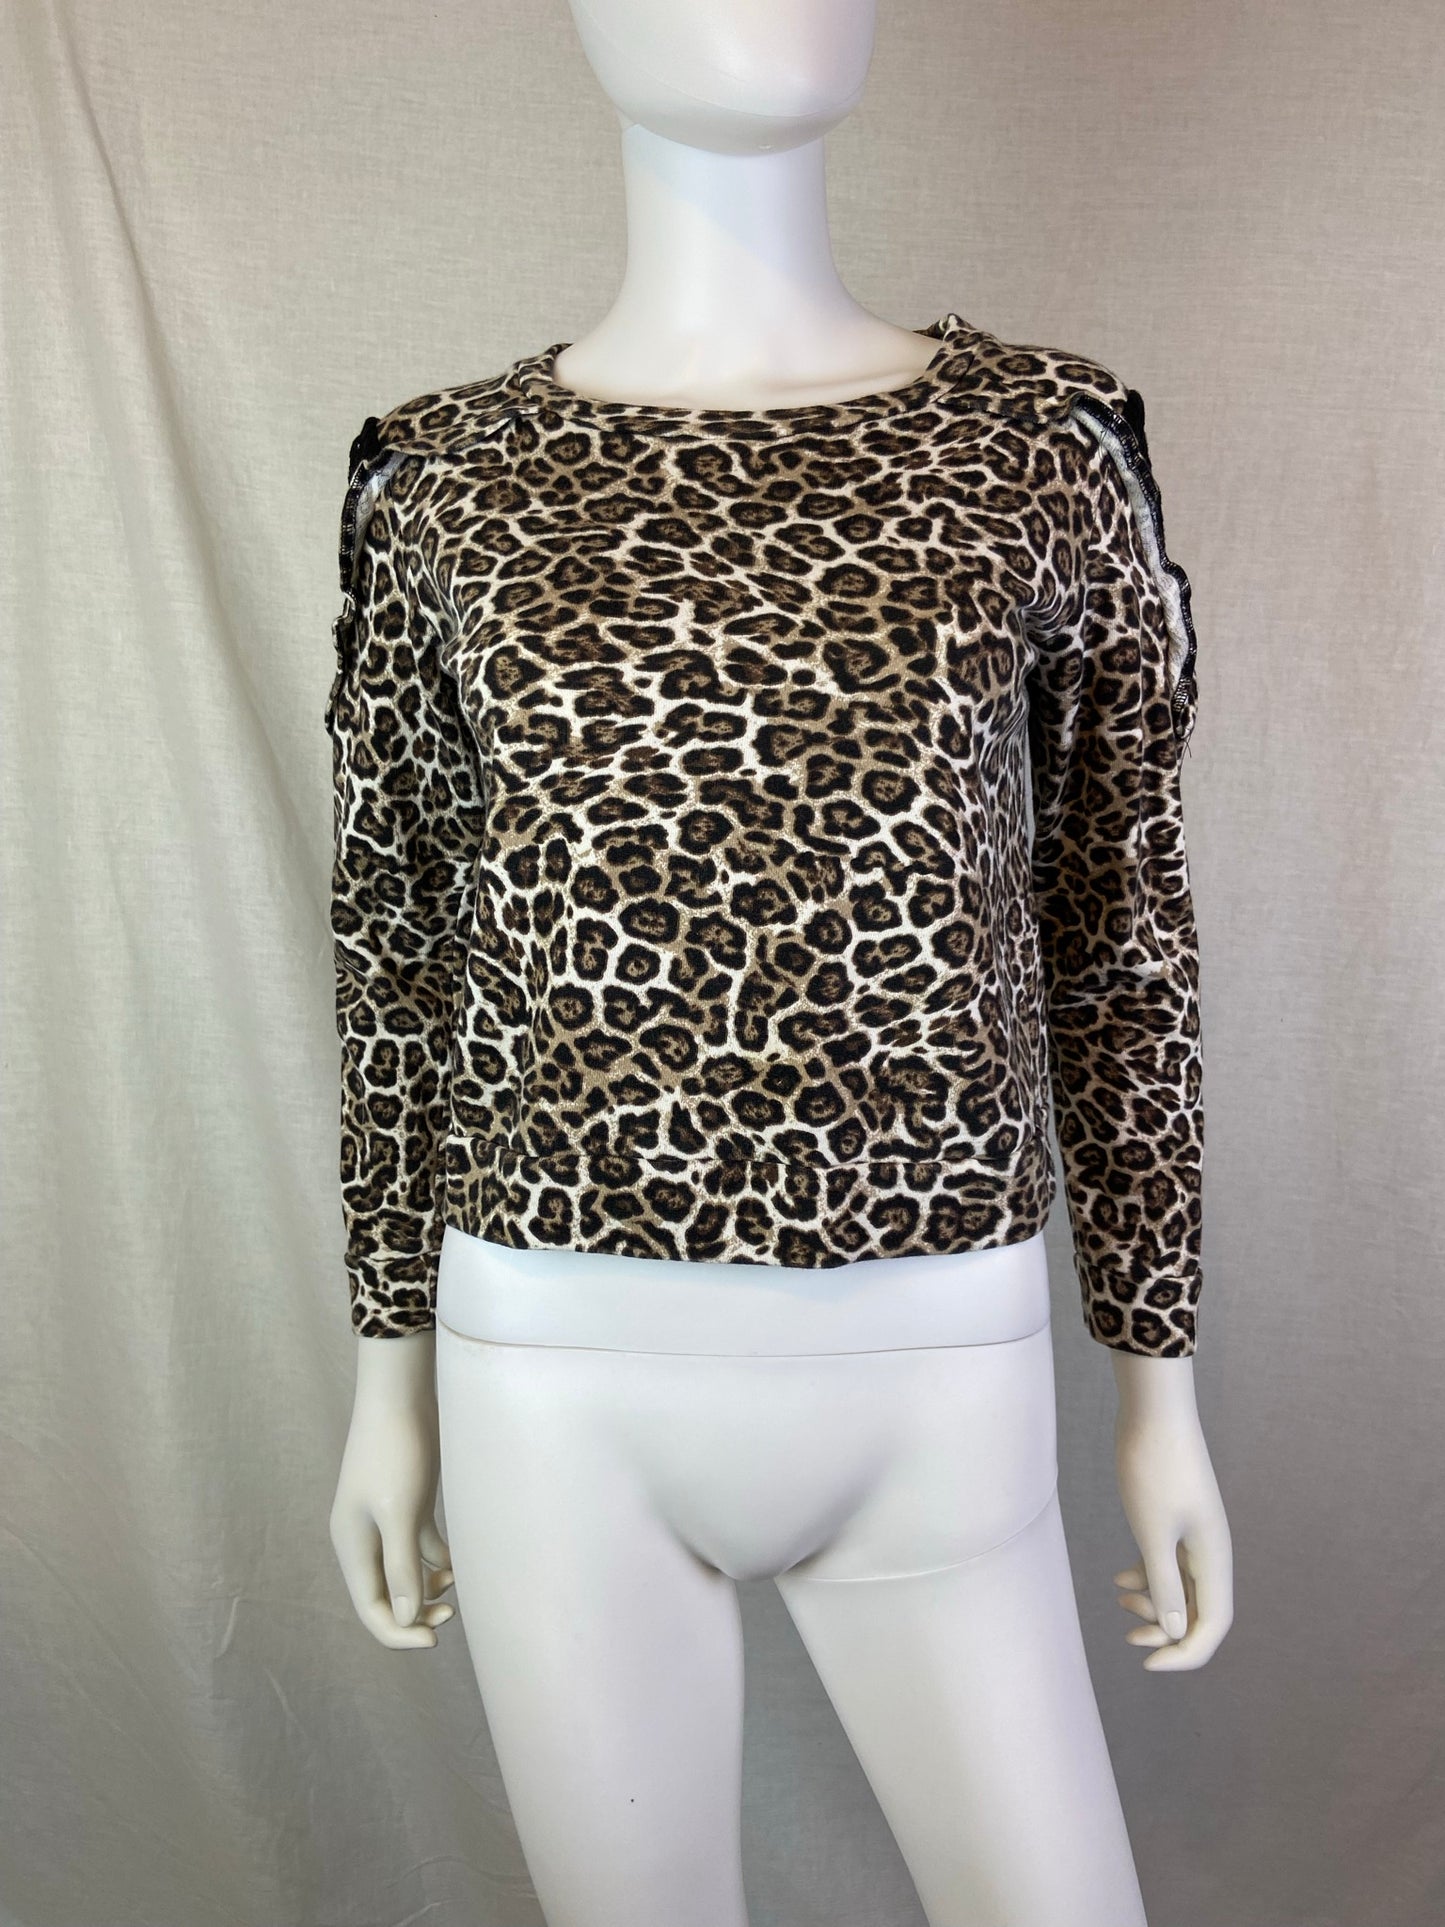 Tinsey Brown Tan Black Cheetah Lace Sweatshirt Top